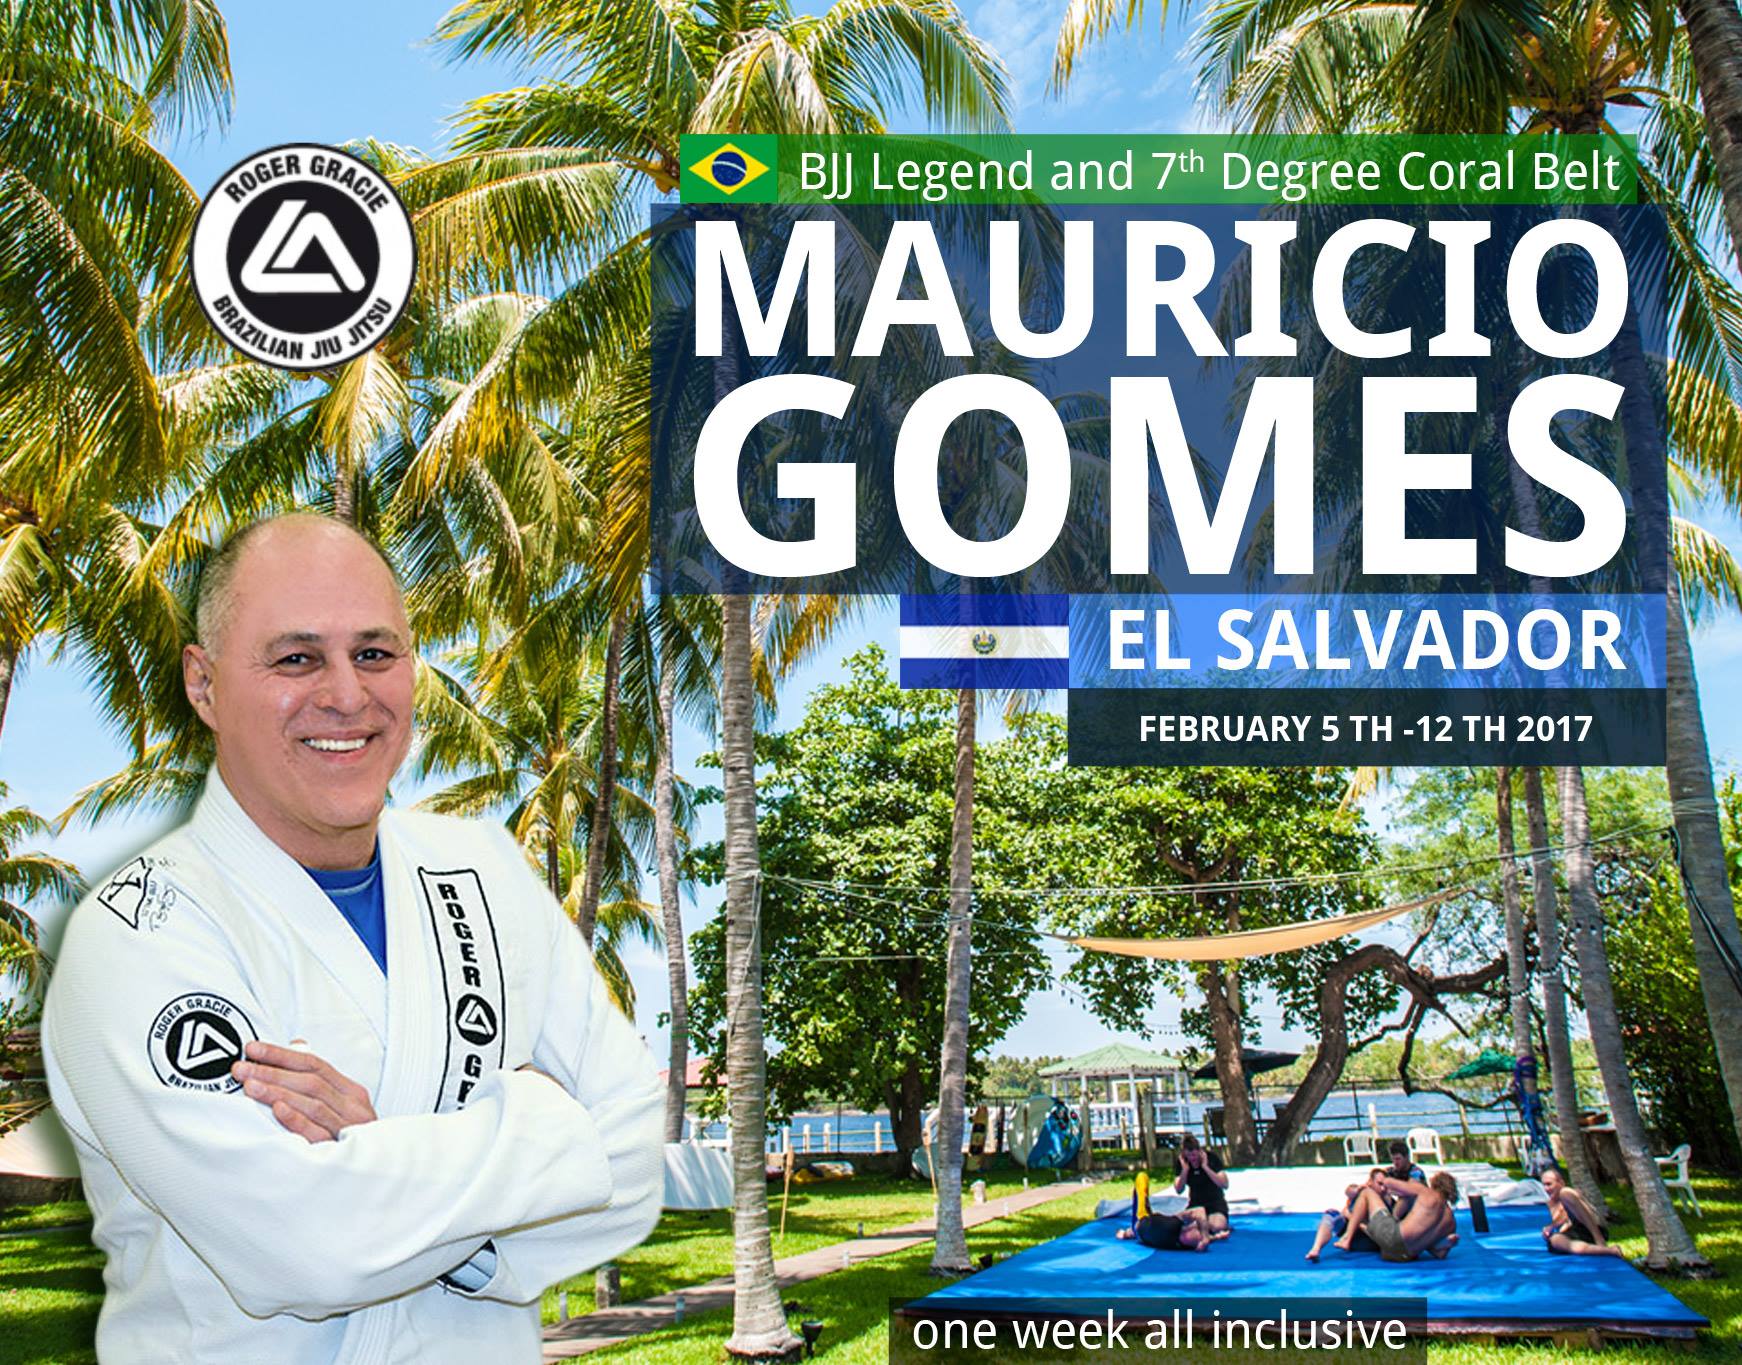 BJJ & Surf Camp with Legendary Coral Belt Mauricio Gomes in El Salvador